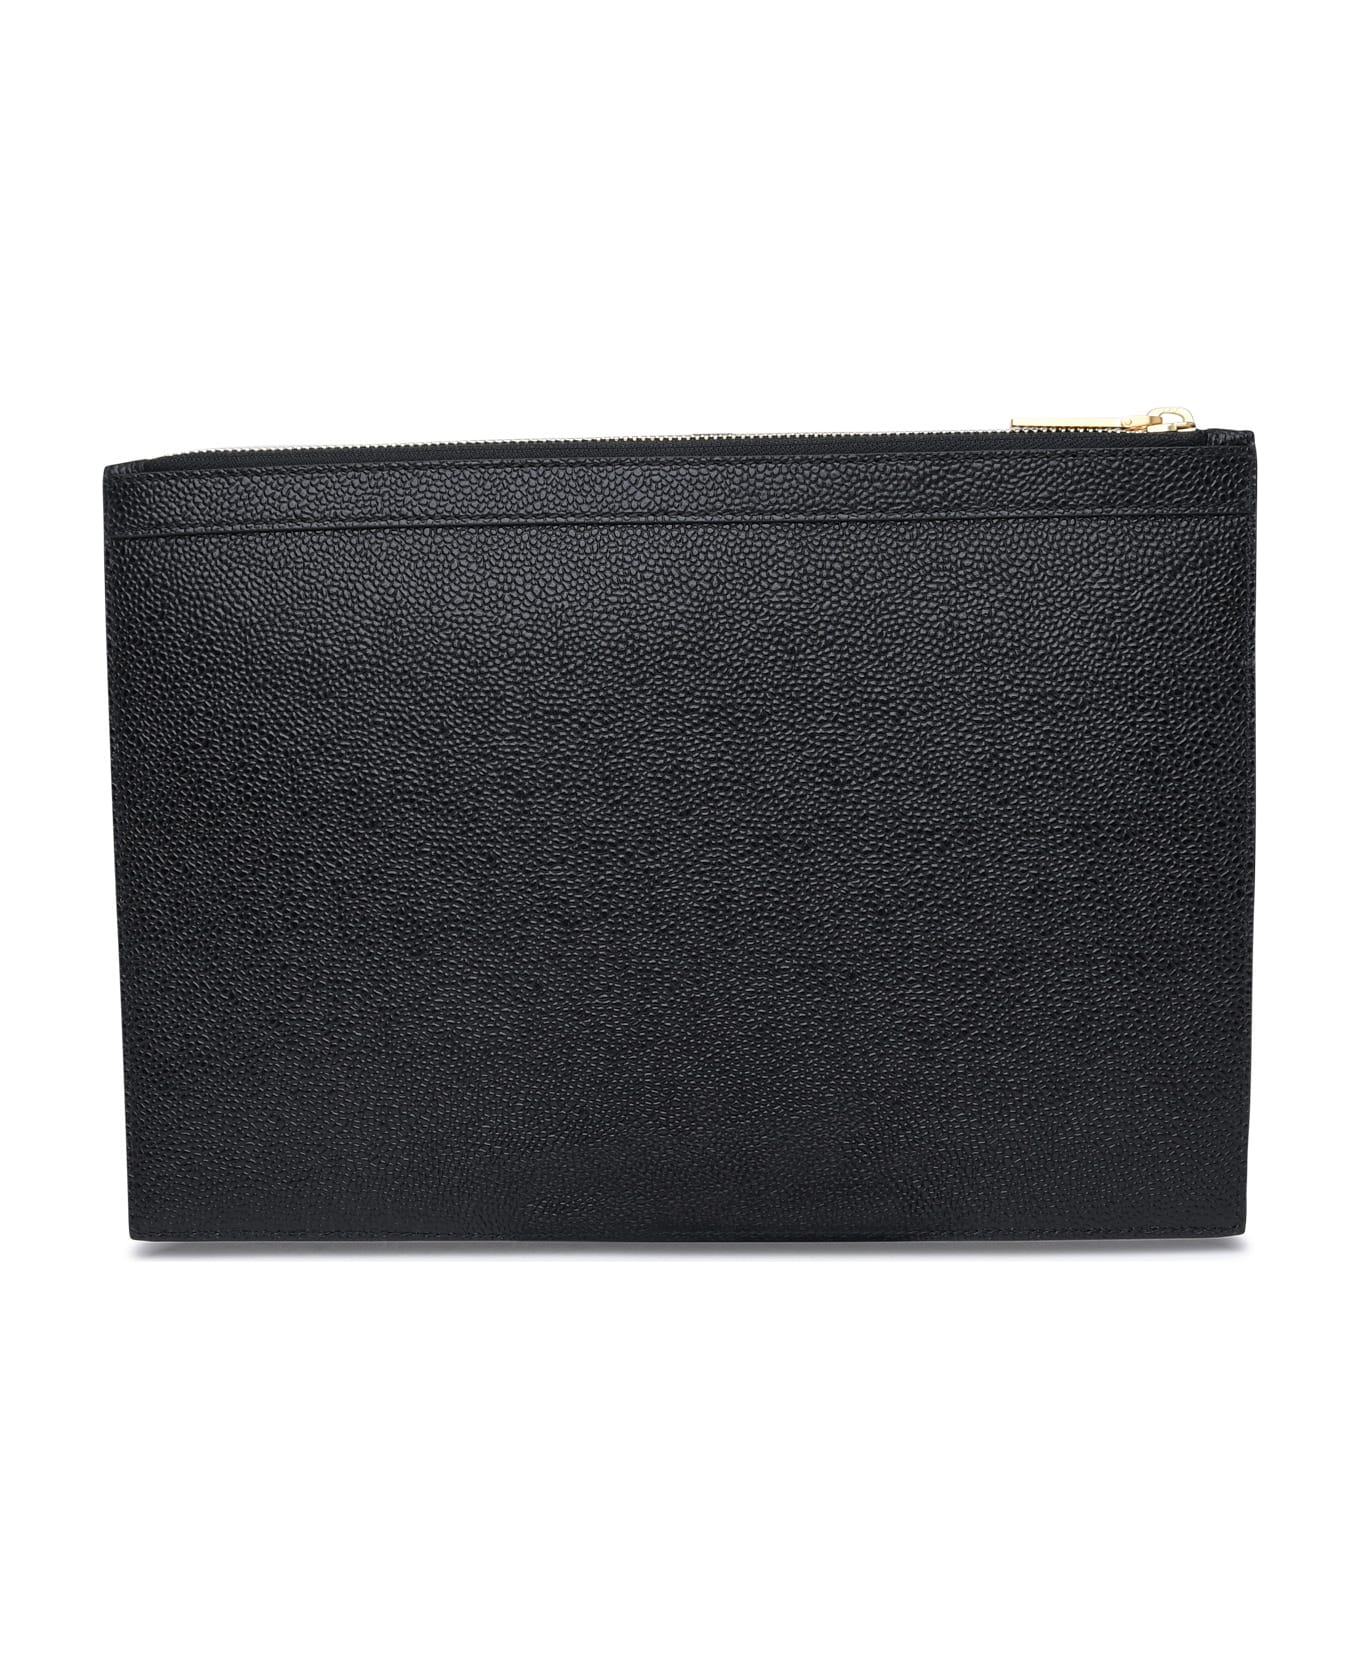 Thom Browne Black Leather Small Document Holder - Black